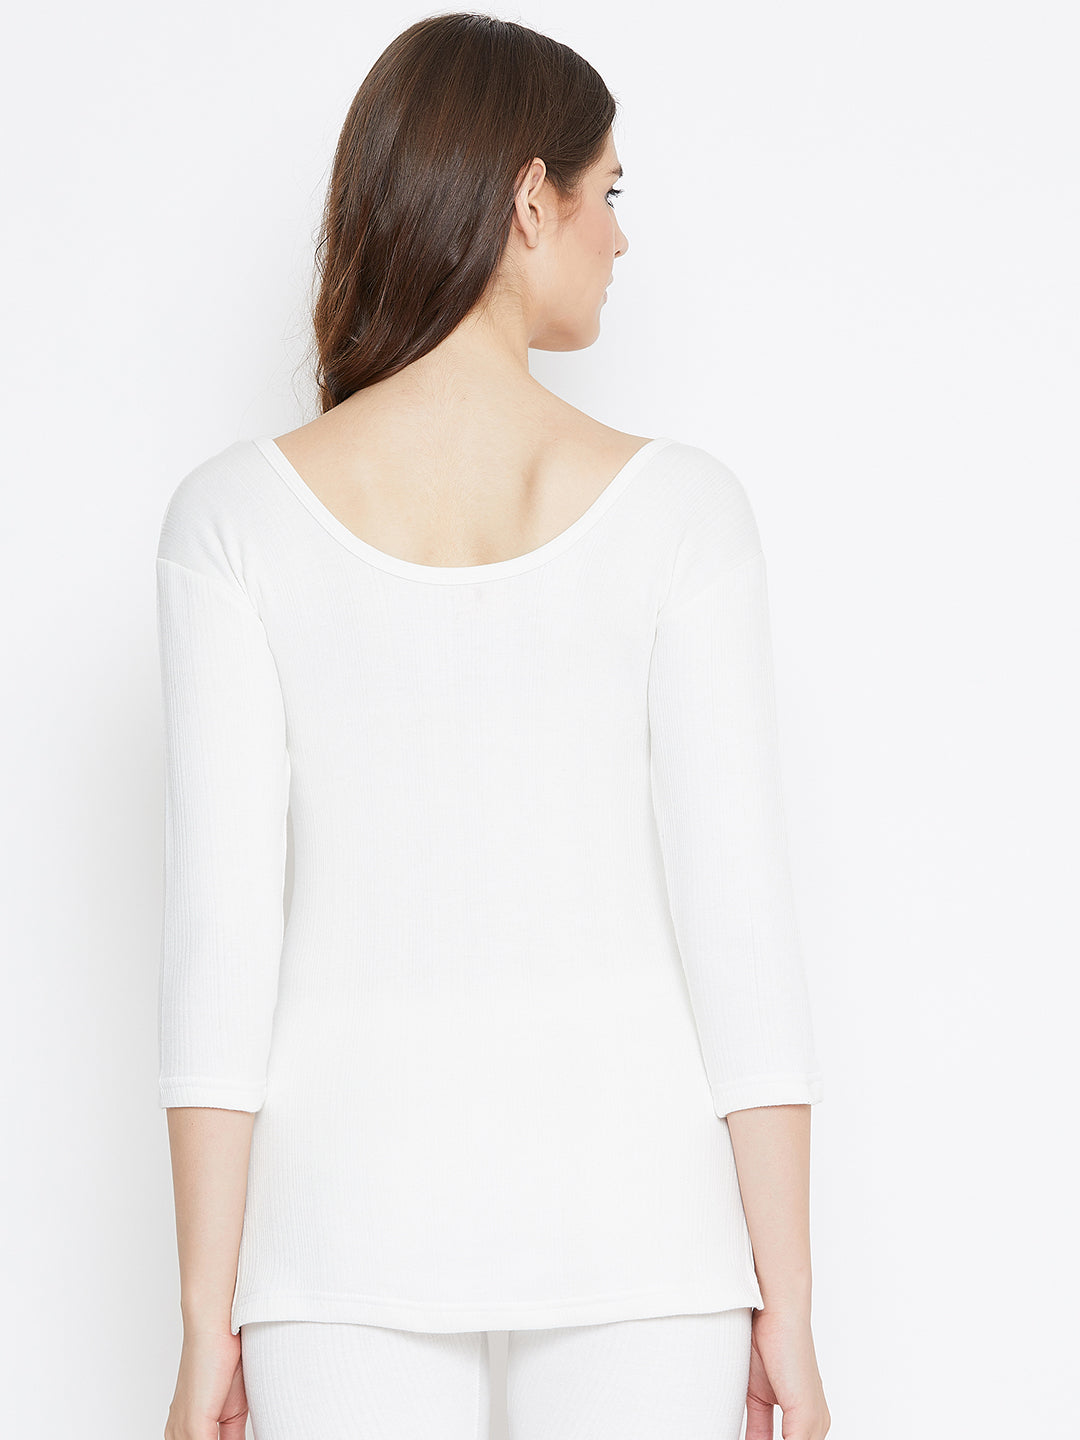 Zimfit Women's White Full Sleeves Thermal Set whitemoon.in